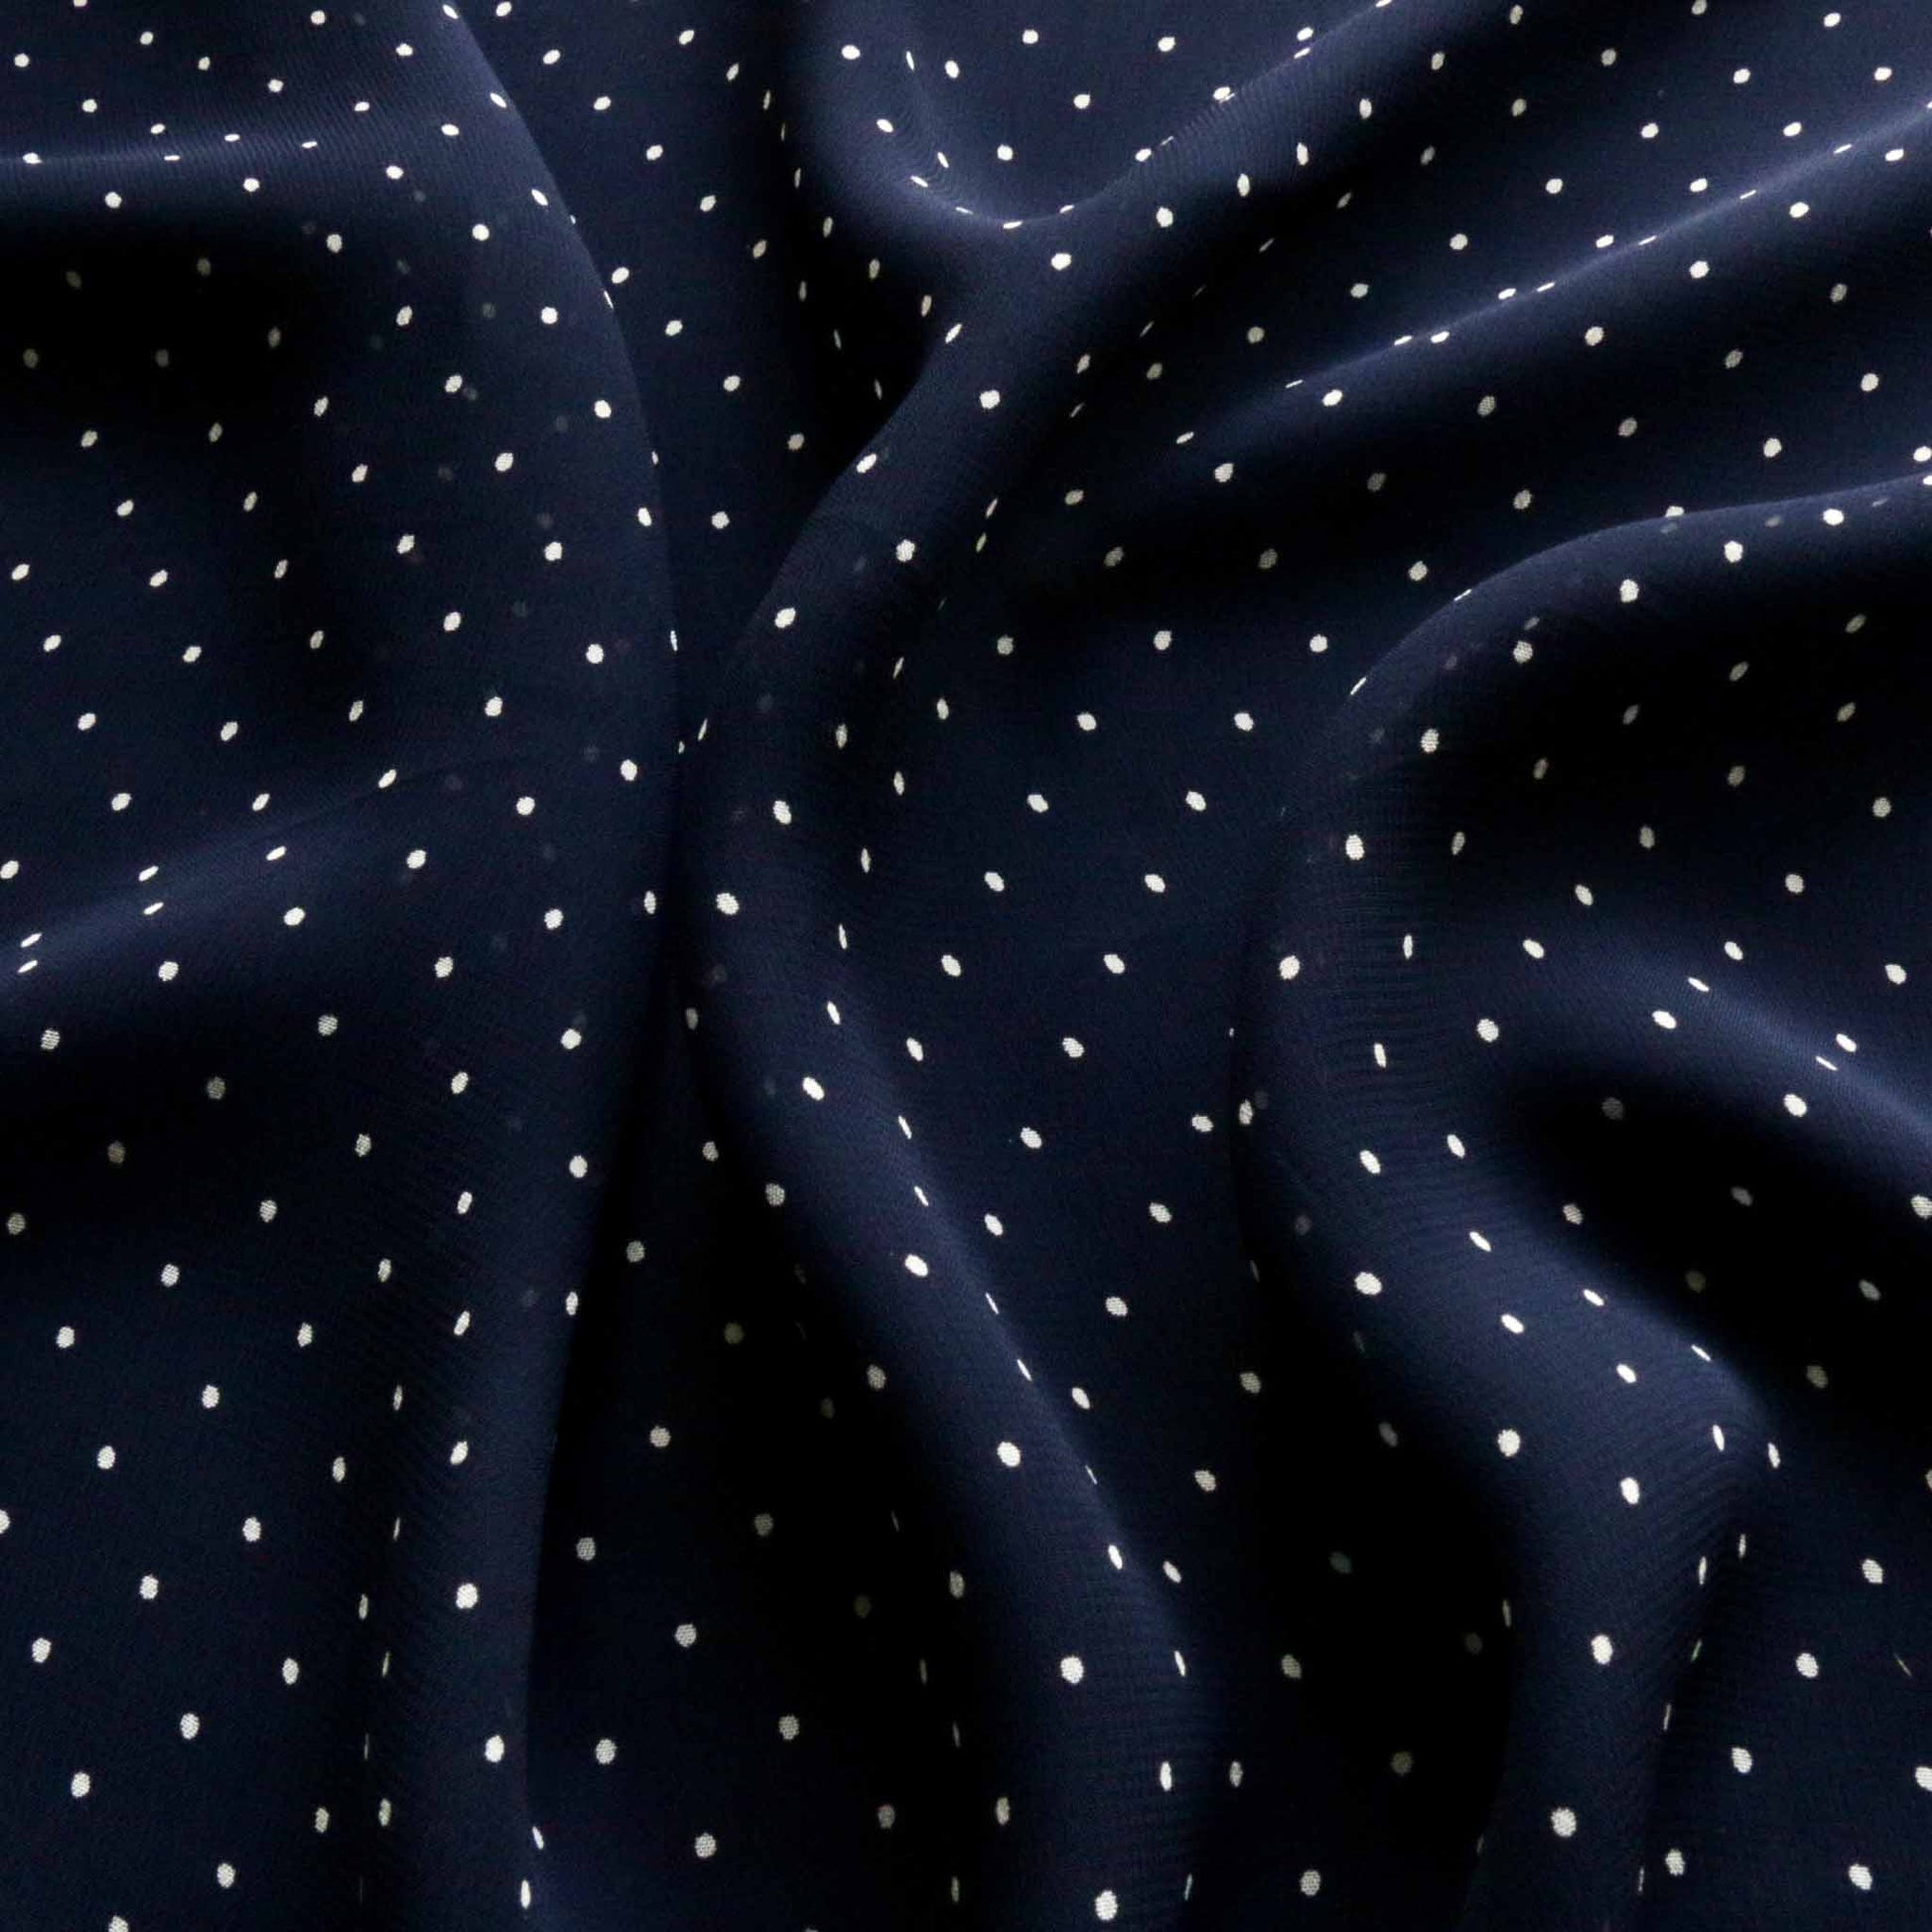 blue viscose chiffon dressmaking fabric with white polka dot design